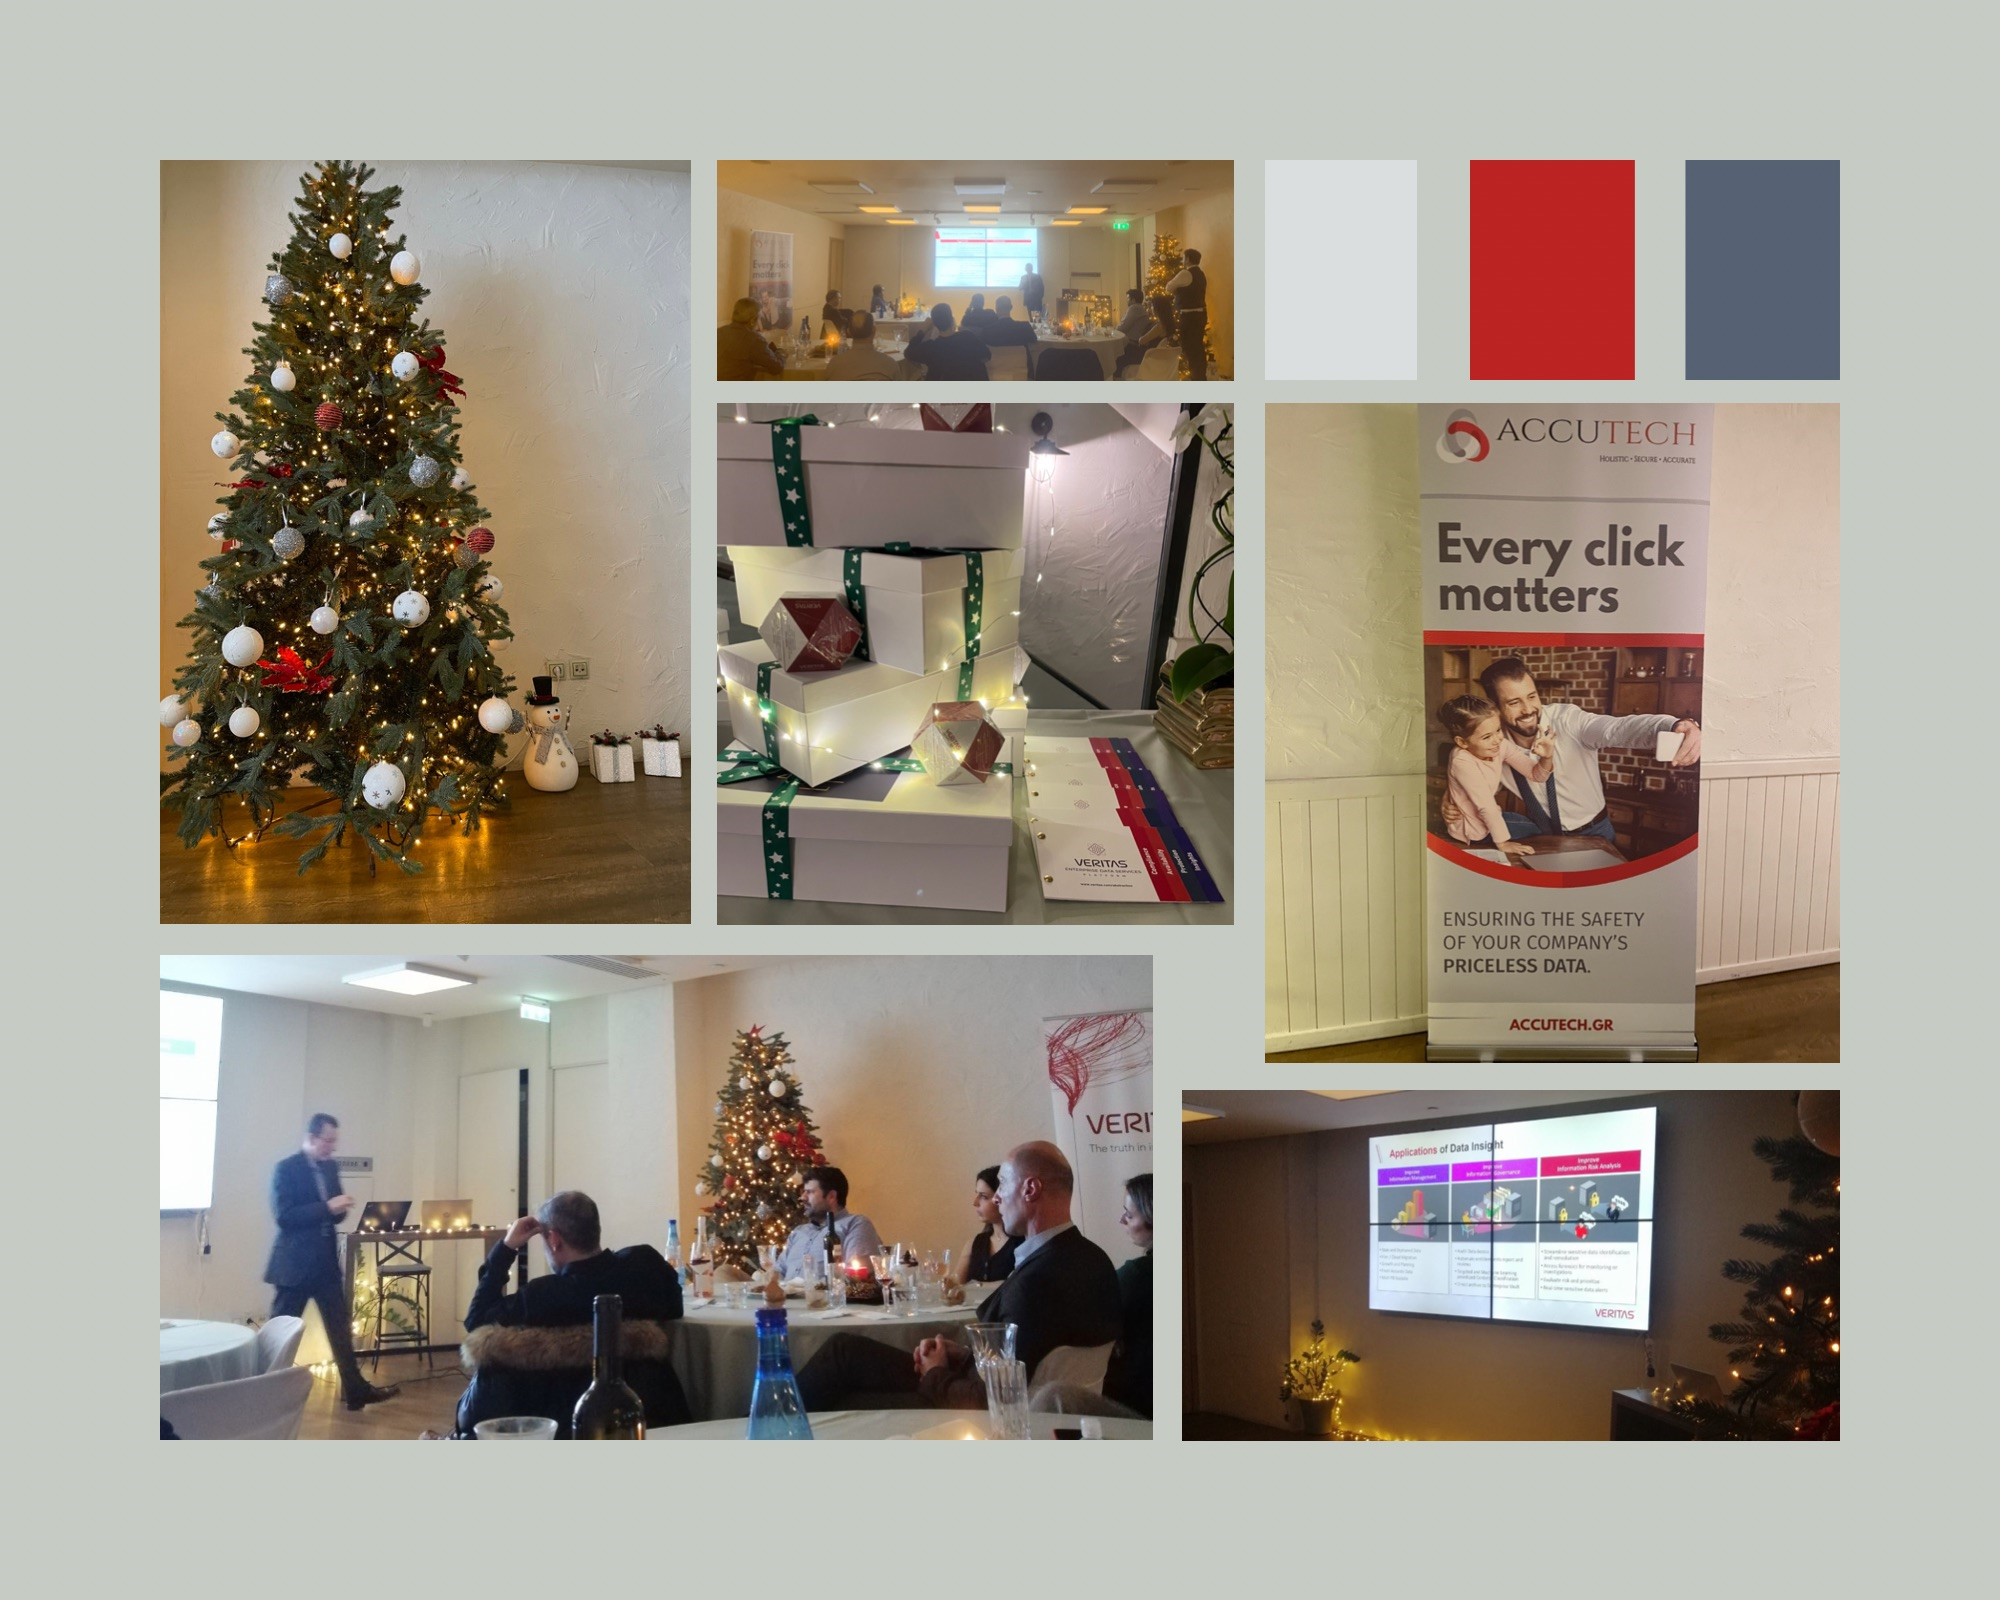 veritasveritas accutech december event photo collage